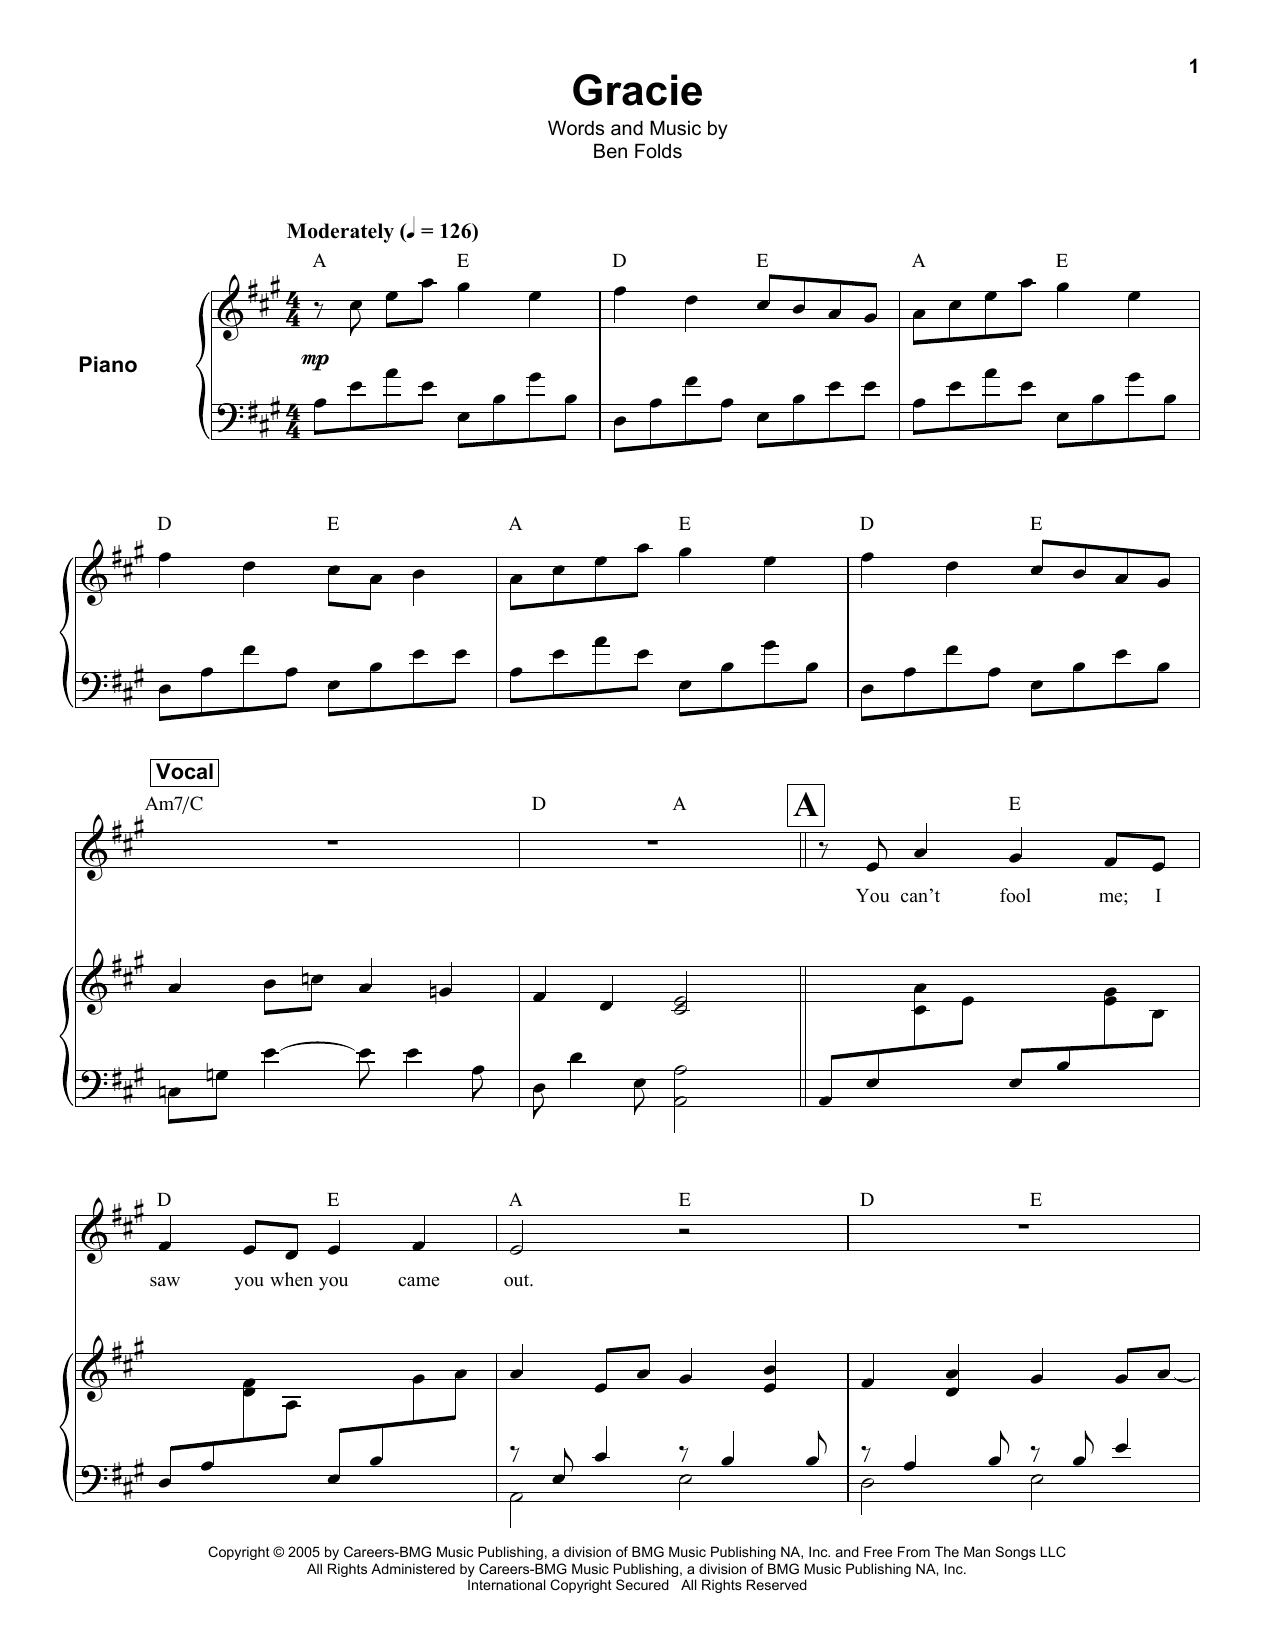 Ben Folds Gracie Sheet Music Notes & Chords for Keyboard Transcription - Download or Print PDF